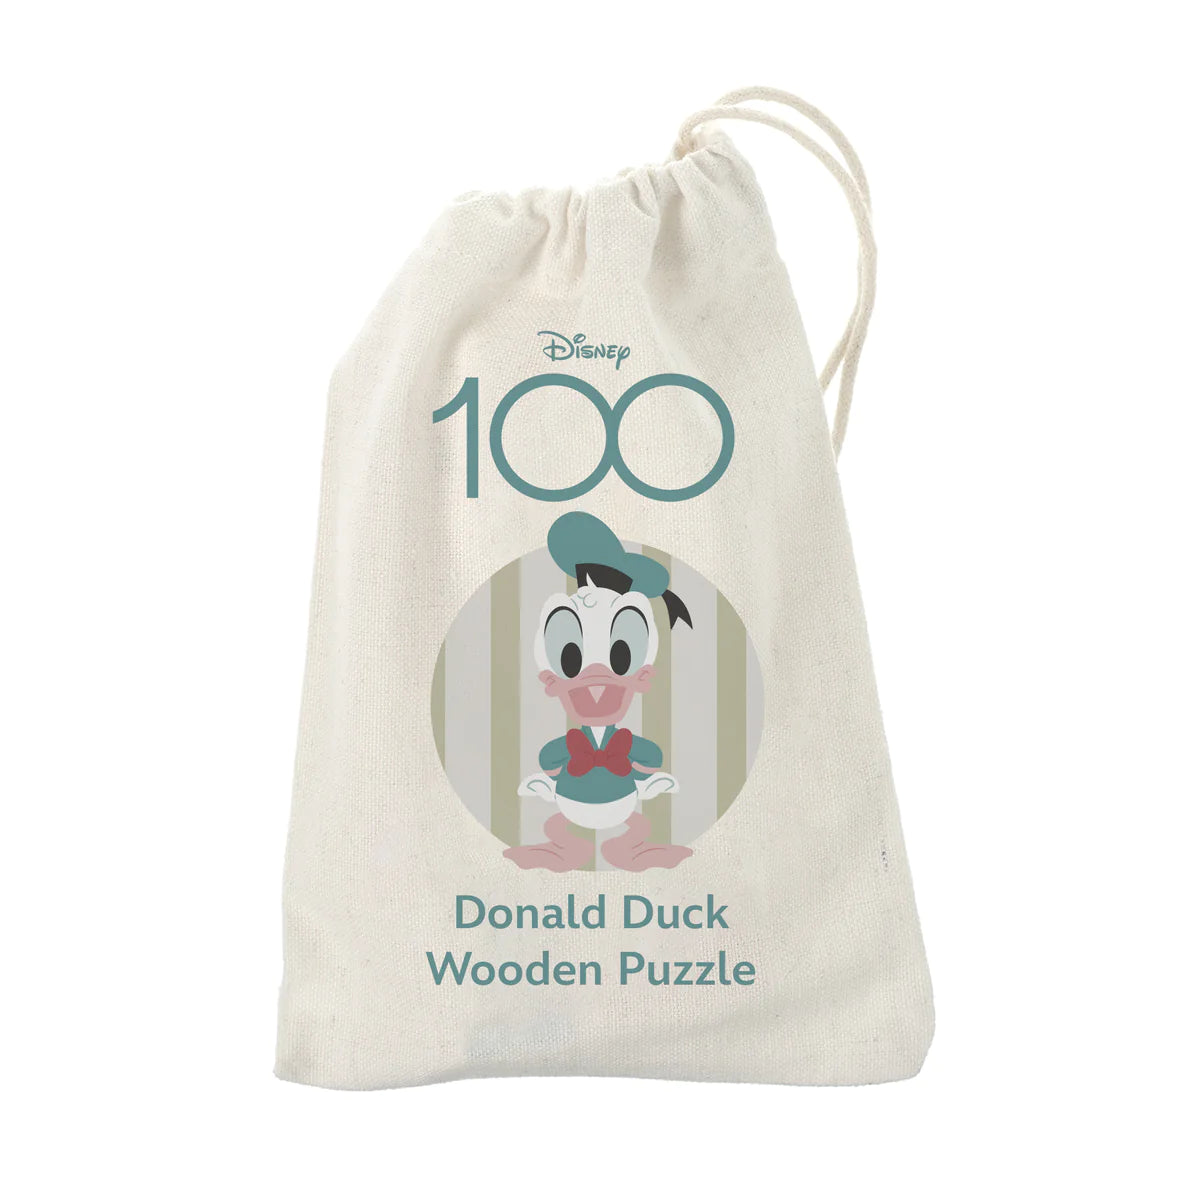 Disney 100 Donald Duck Wooden Puzzle